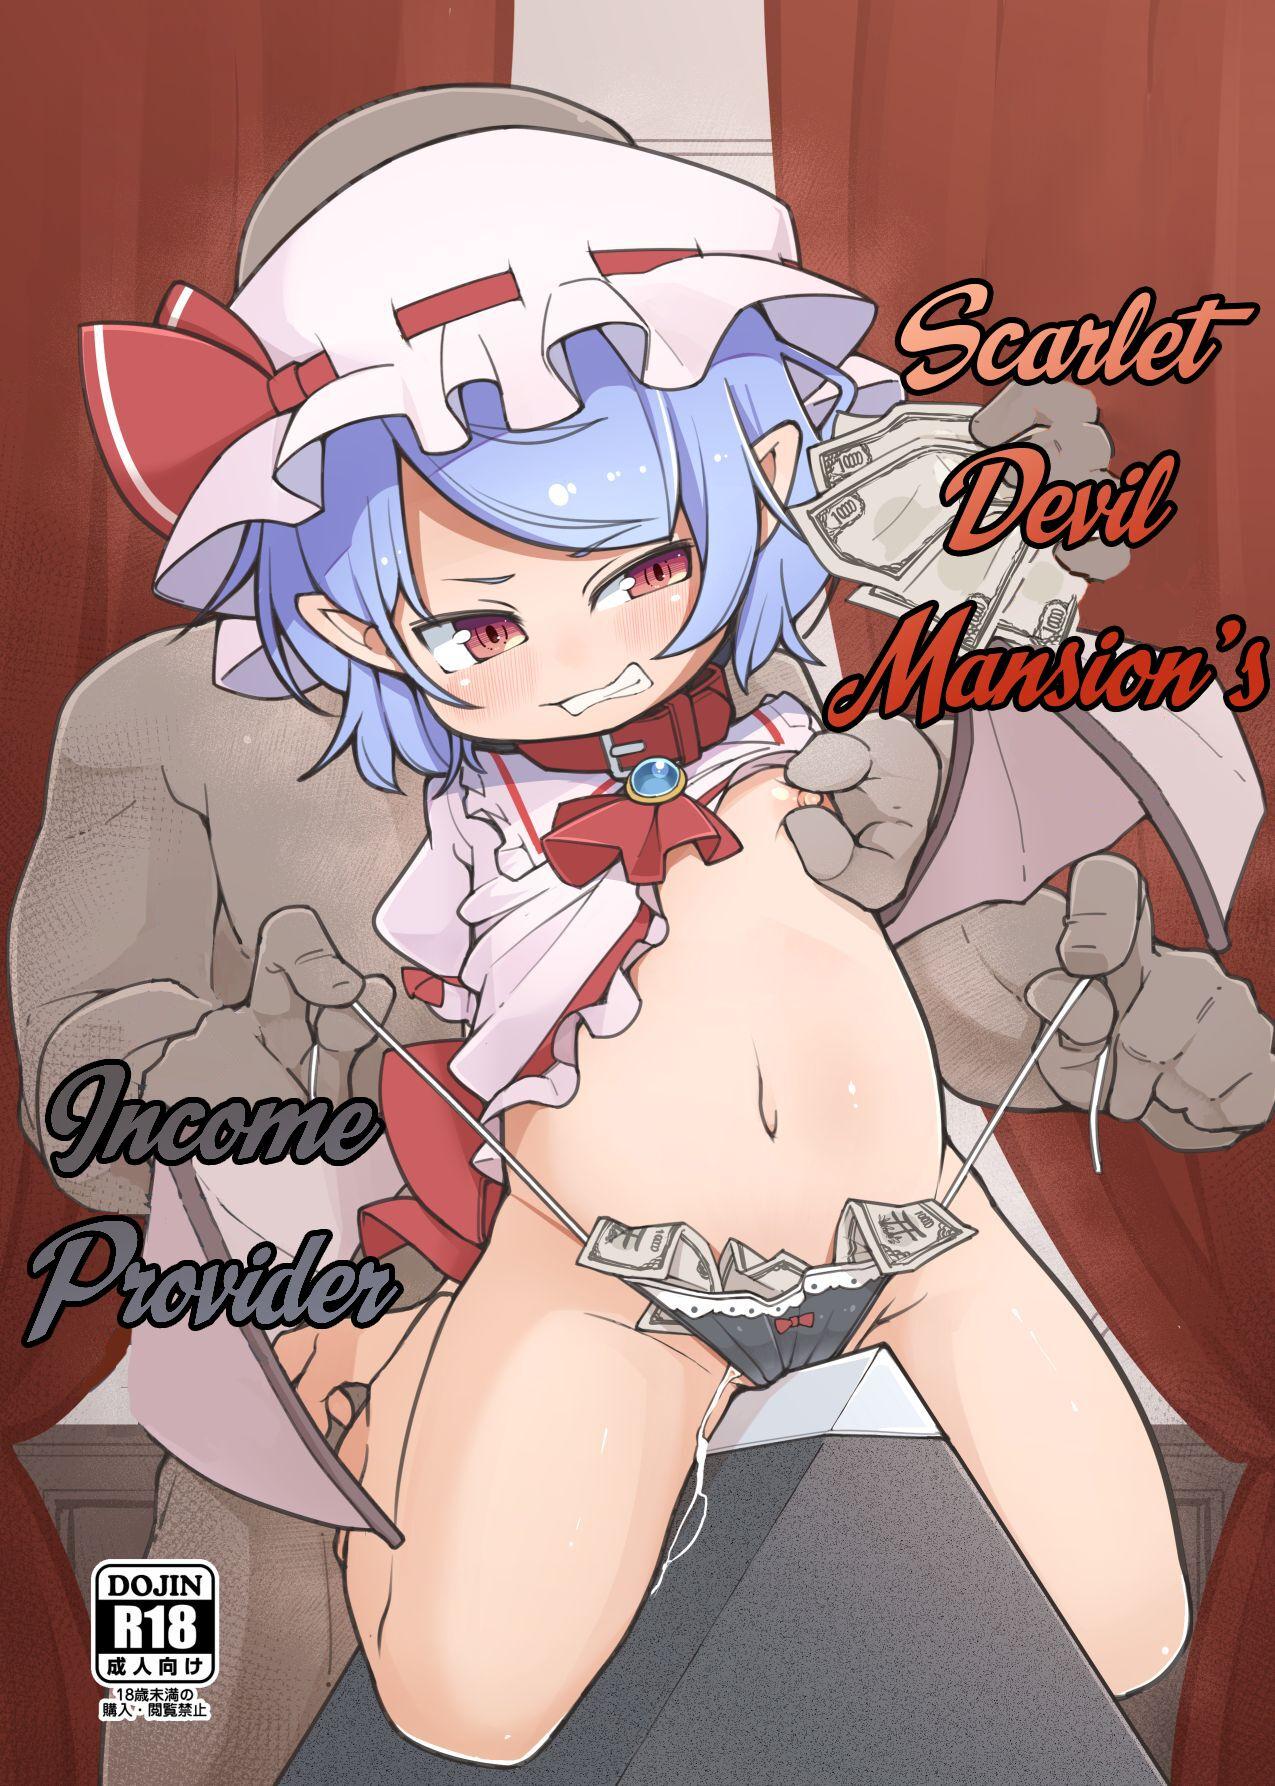 Koumakan no Daikokubashira | Scarlet Devil Mansion's Income Provider 1